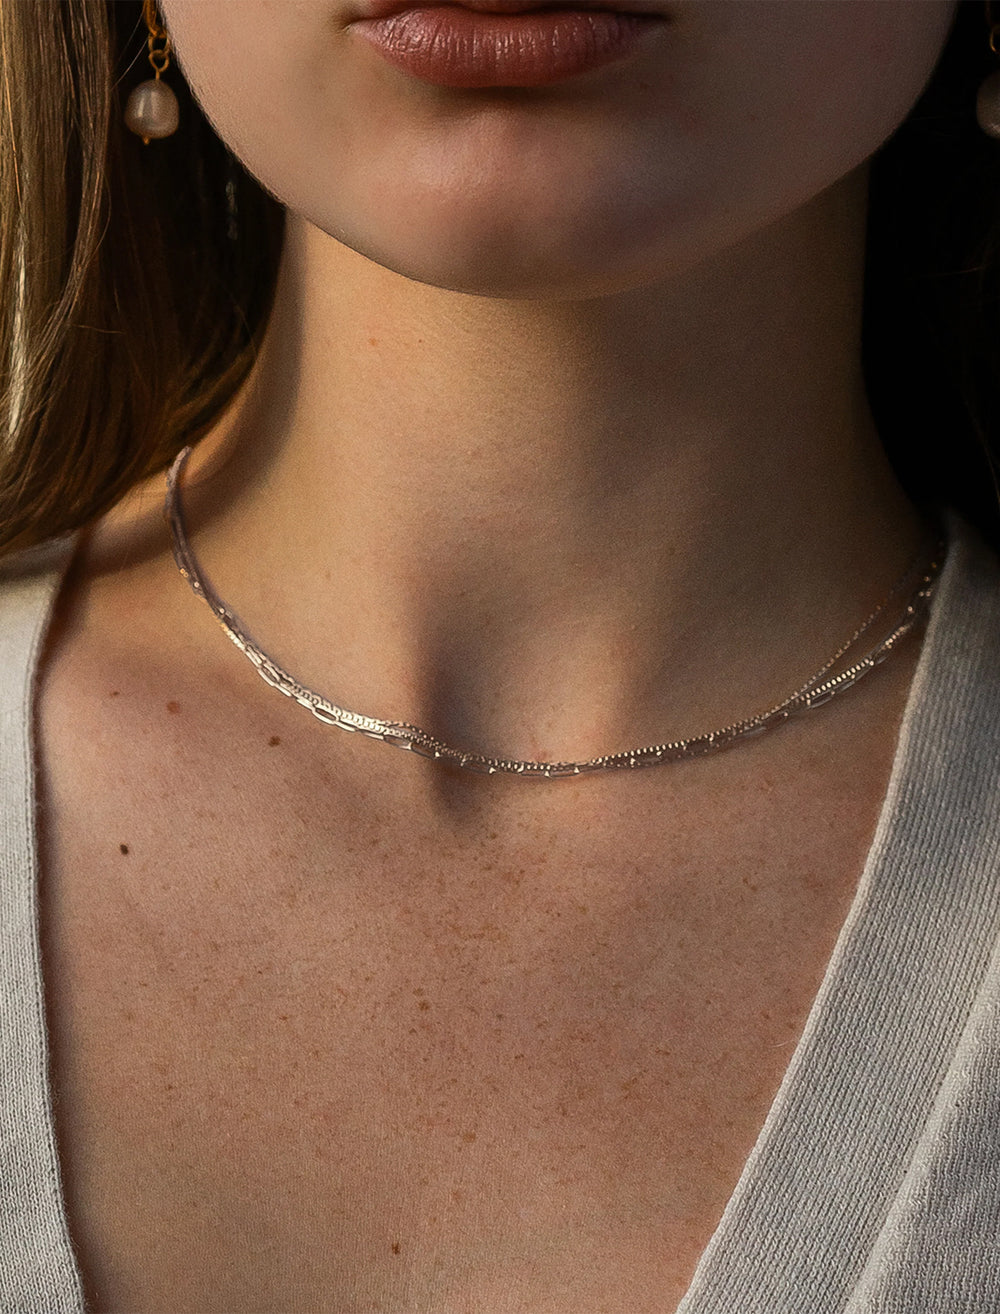 Model wearing THATCH's rosalie necklace in silver.